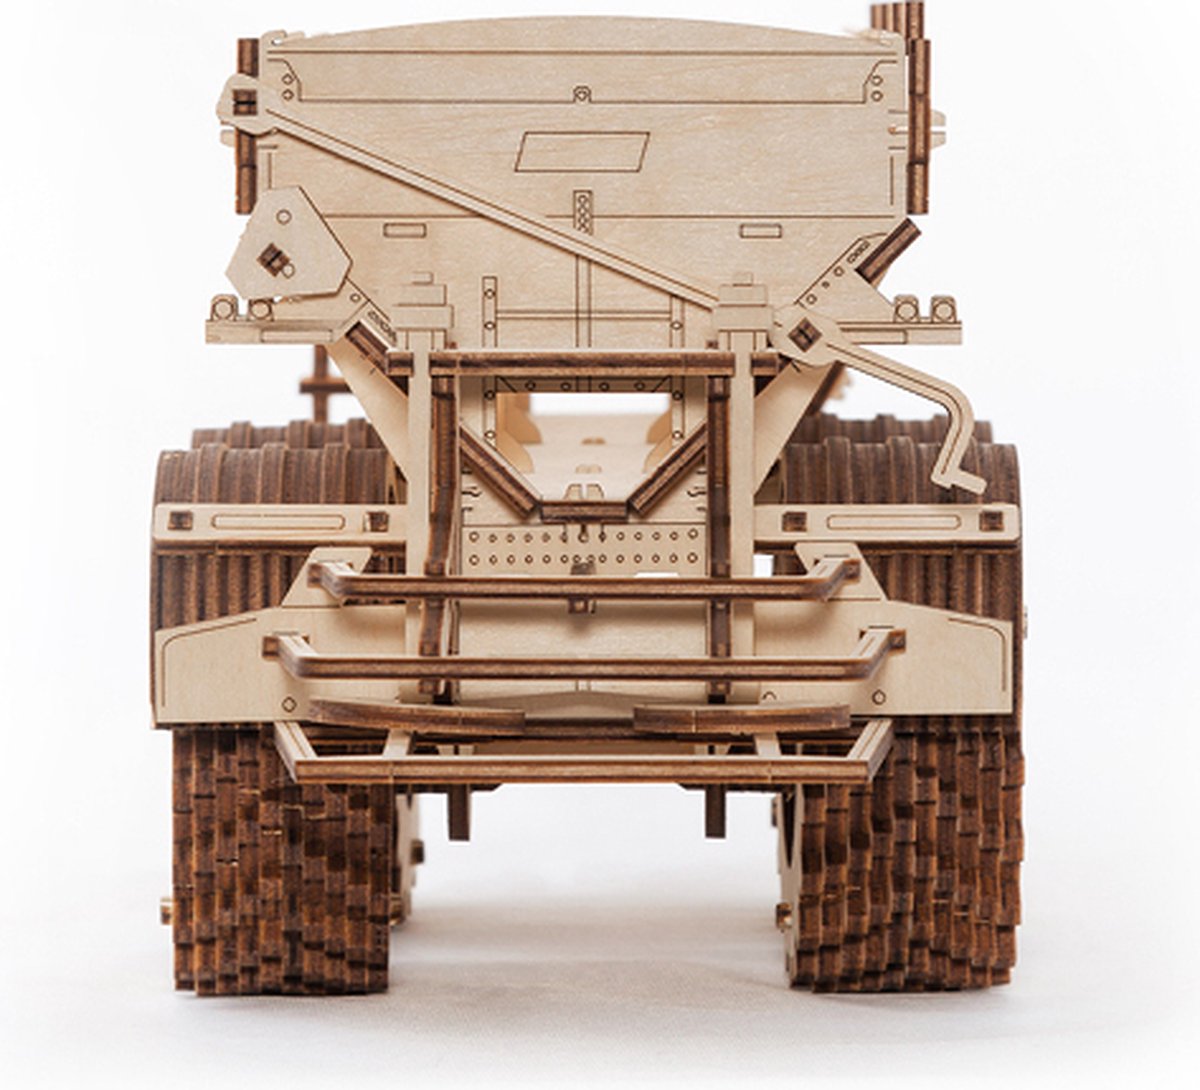 Art Bizniz 3D puzzel cm Trailer Tractor K 7M 50 cm hout 206 st. - Bruin